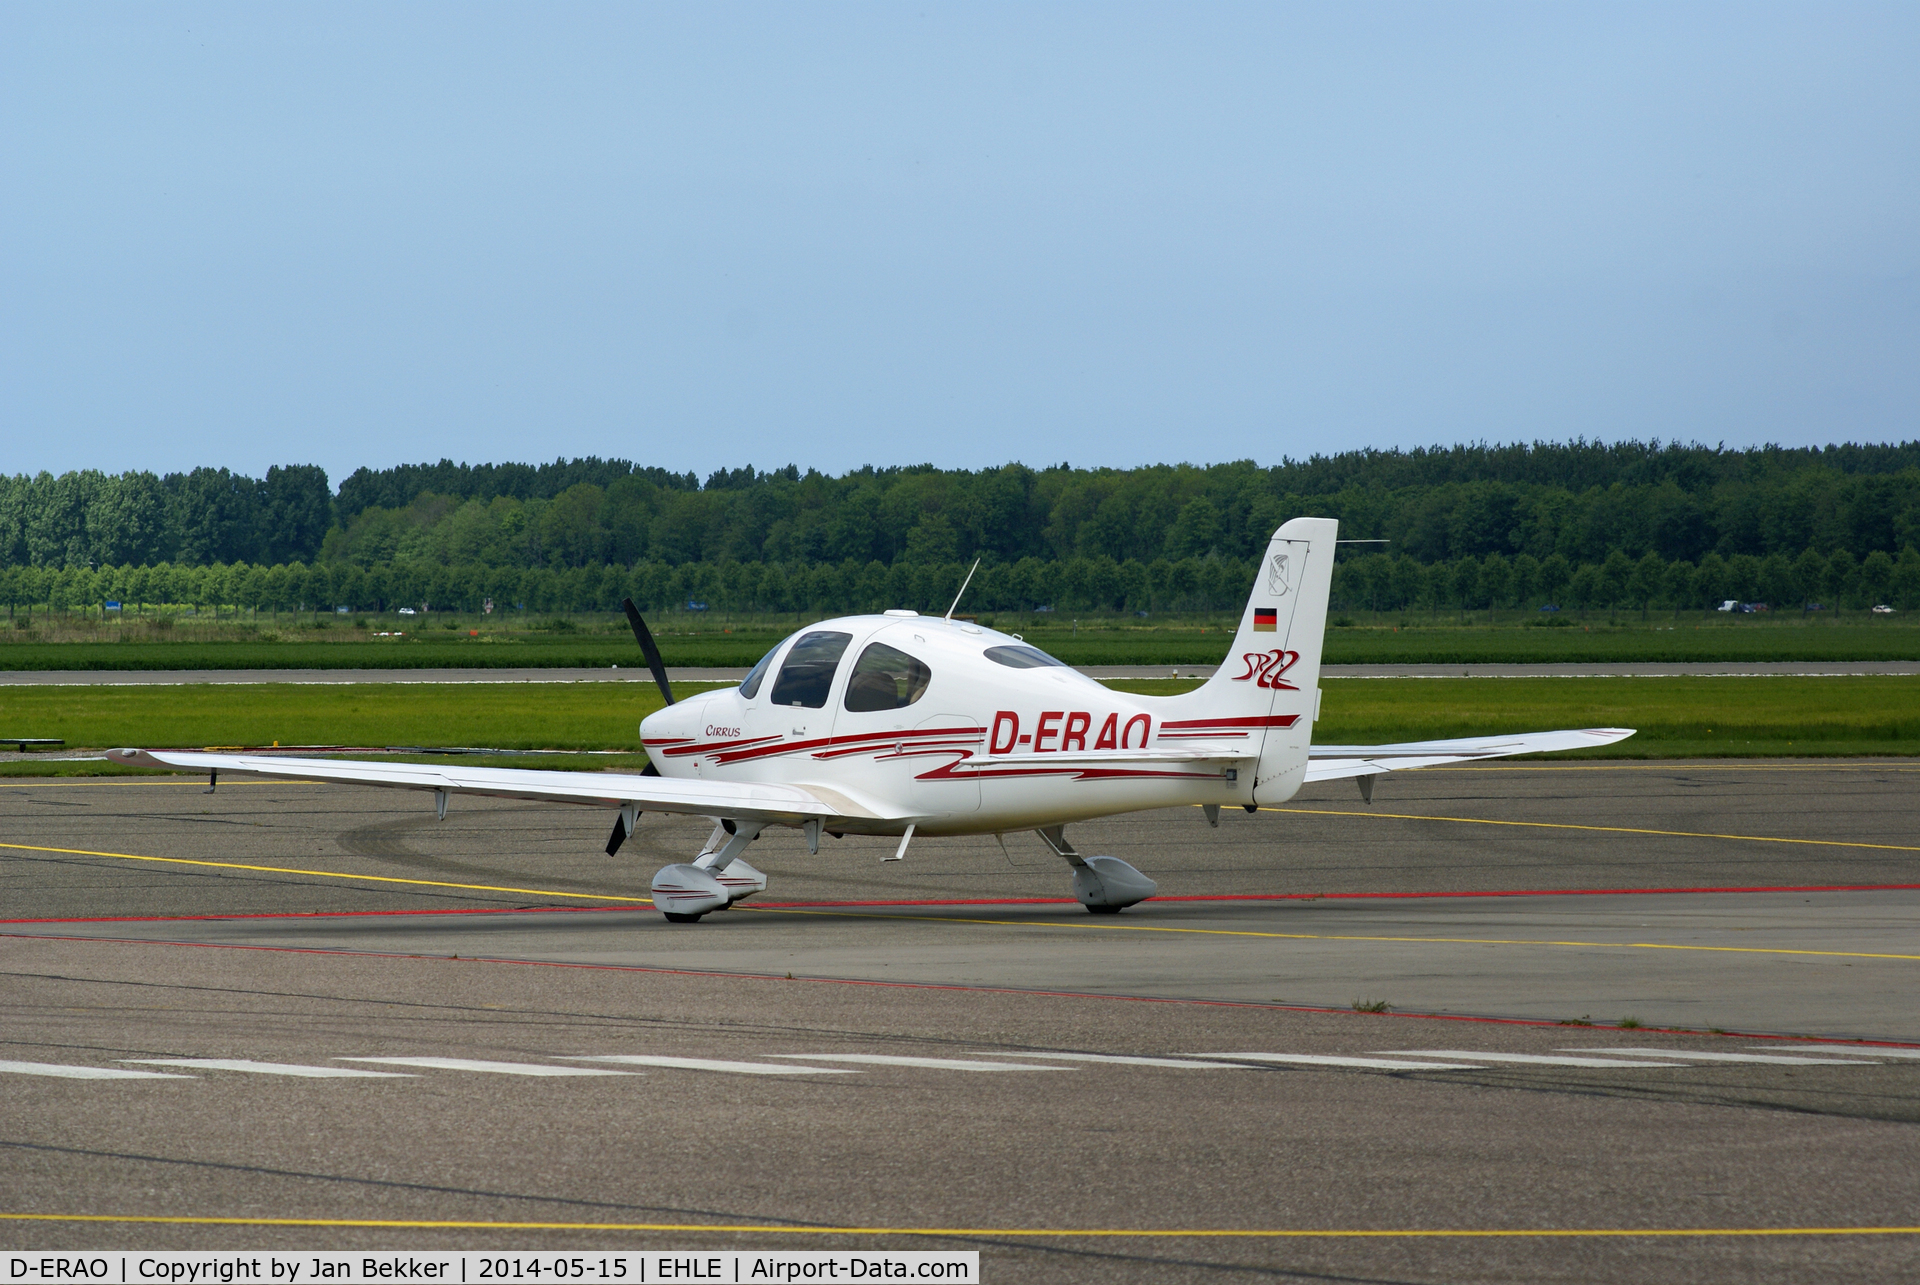 D-ERAO, 2003 Cirrus SR22 C/N 0539, Lelystad Airport